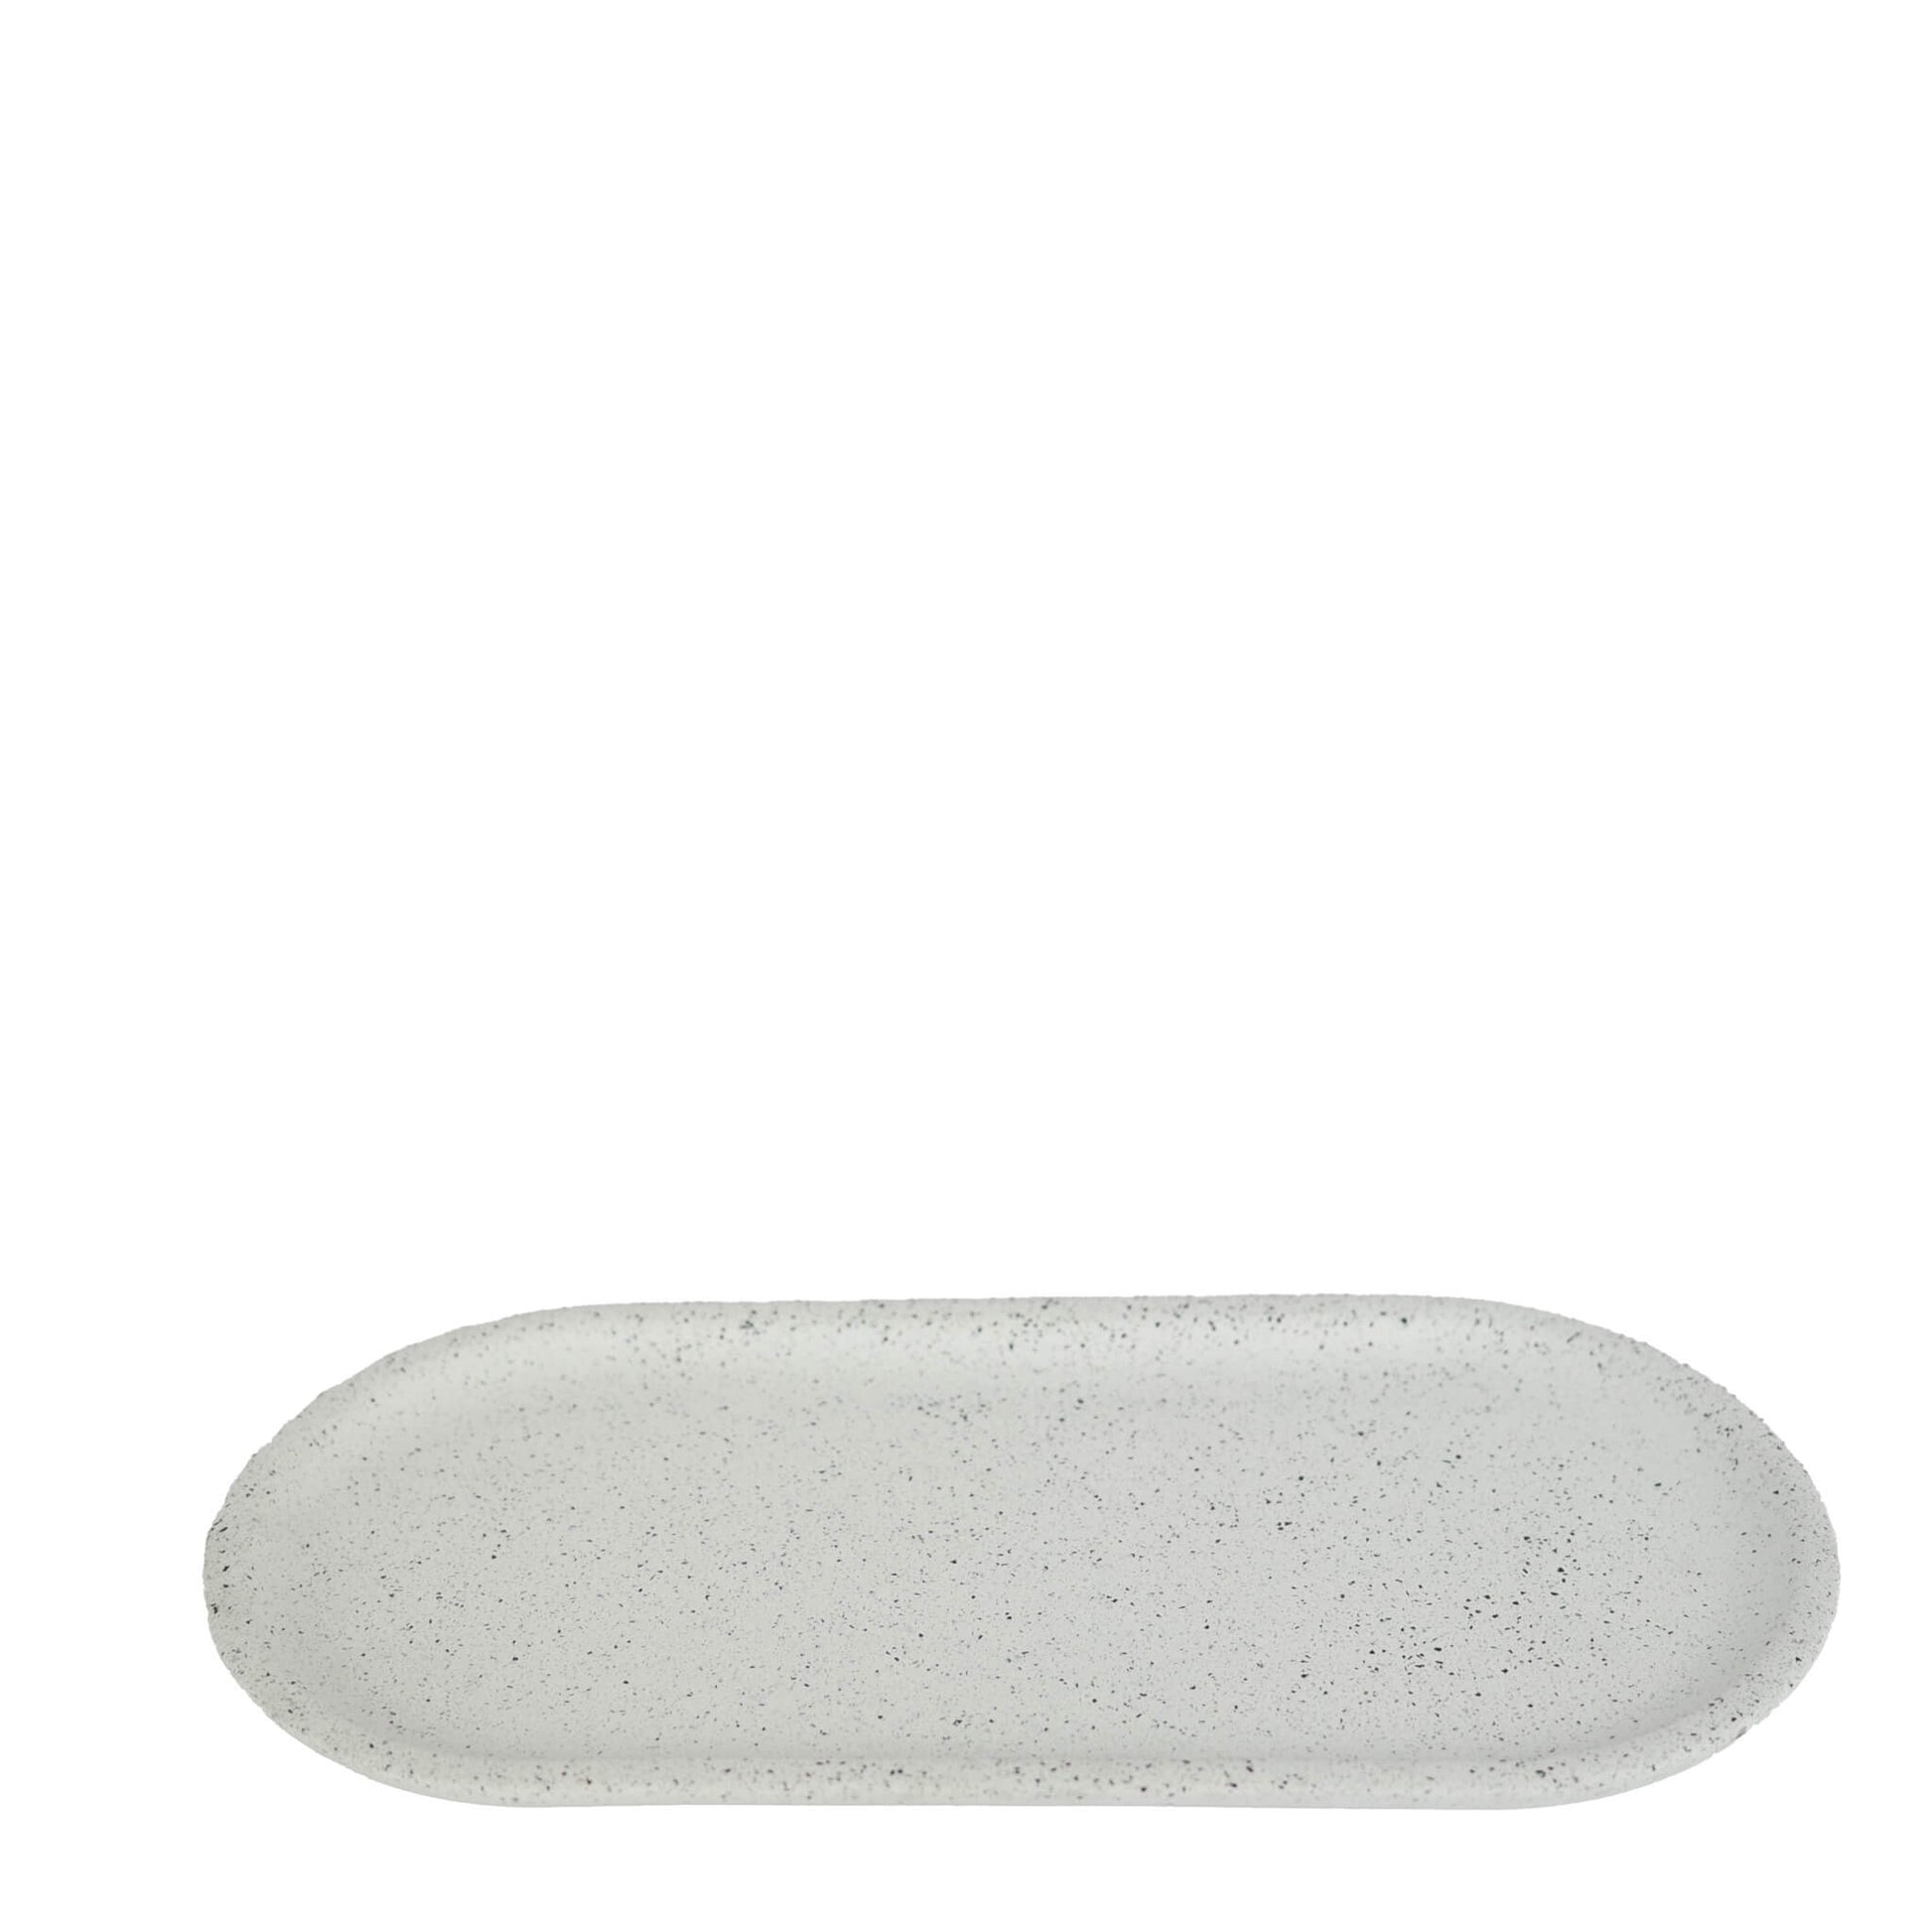 White concrete oblong decorative tray